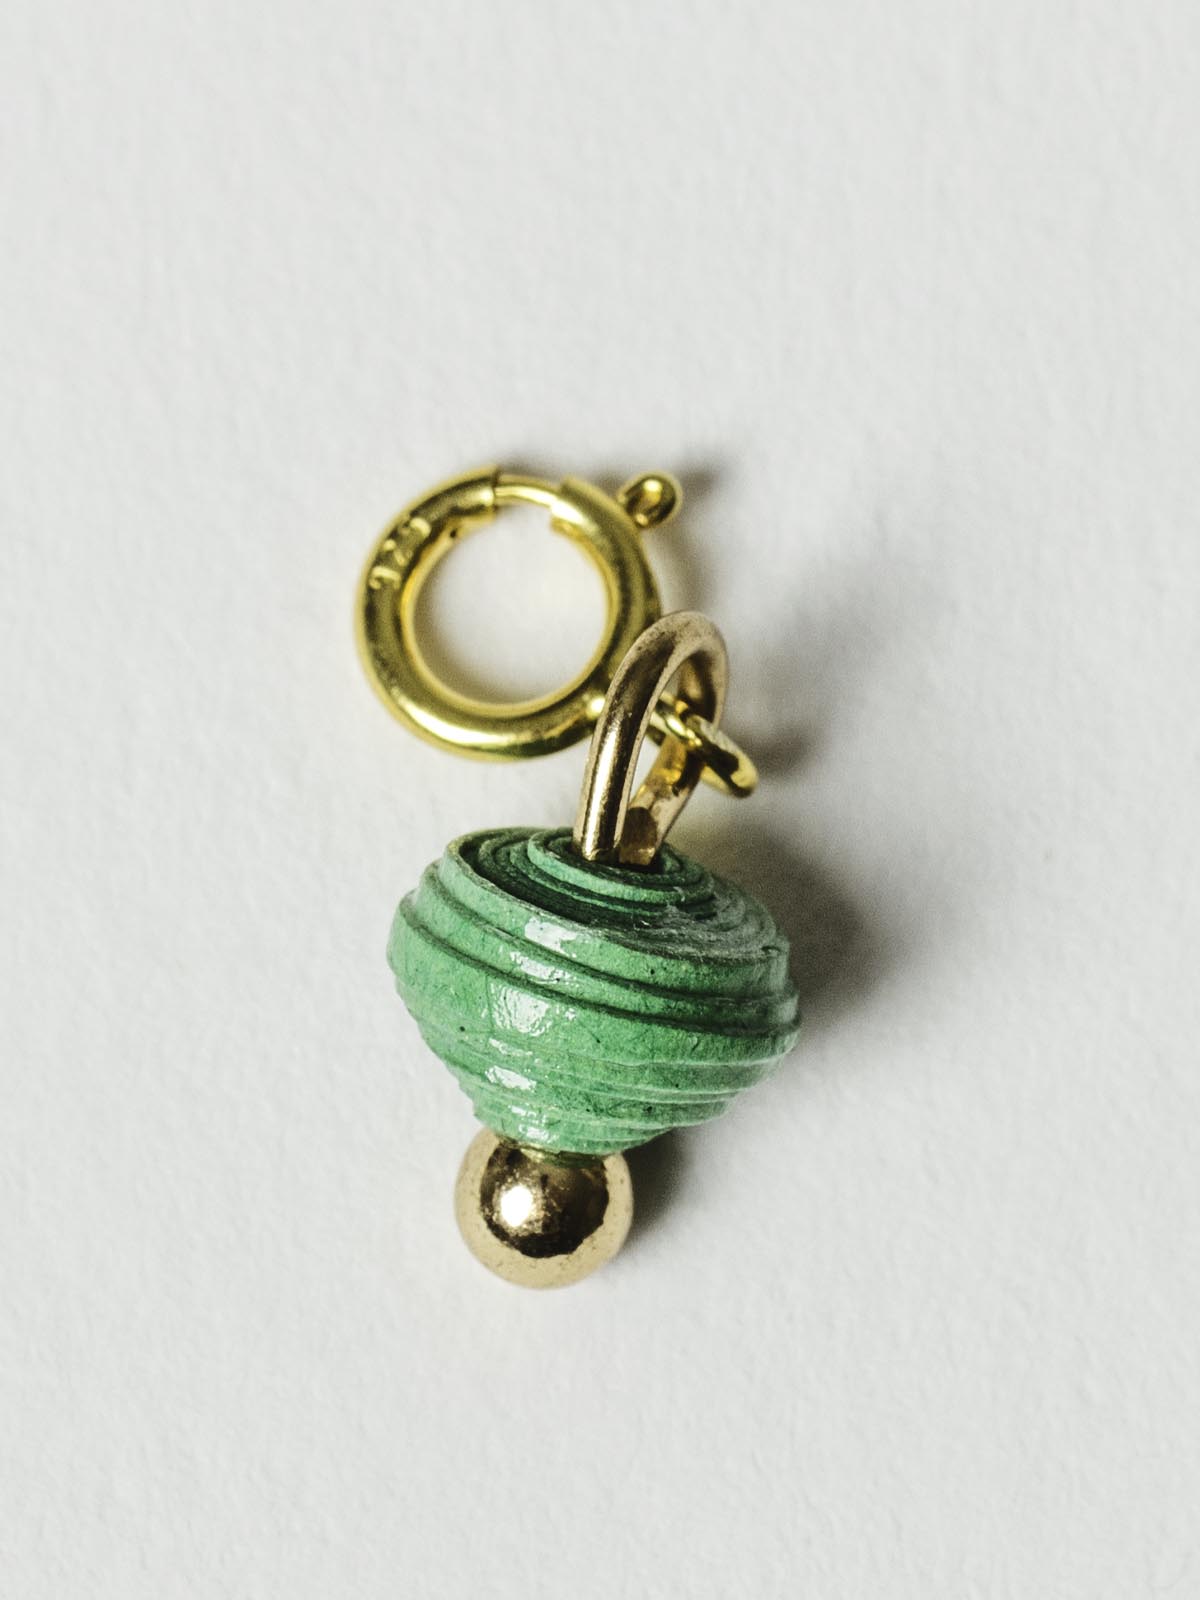 Medium green bead charm on gold clasp. 